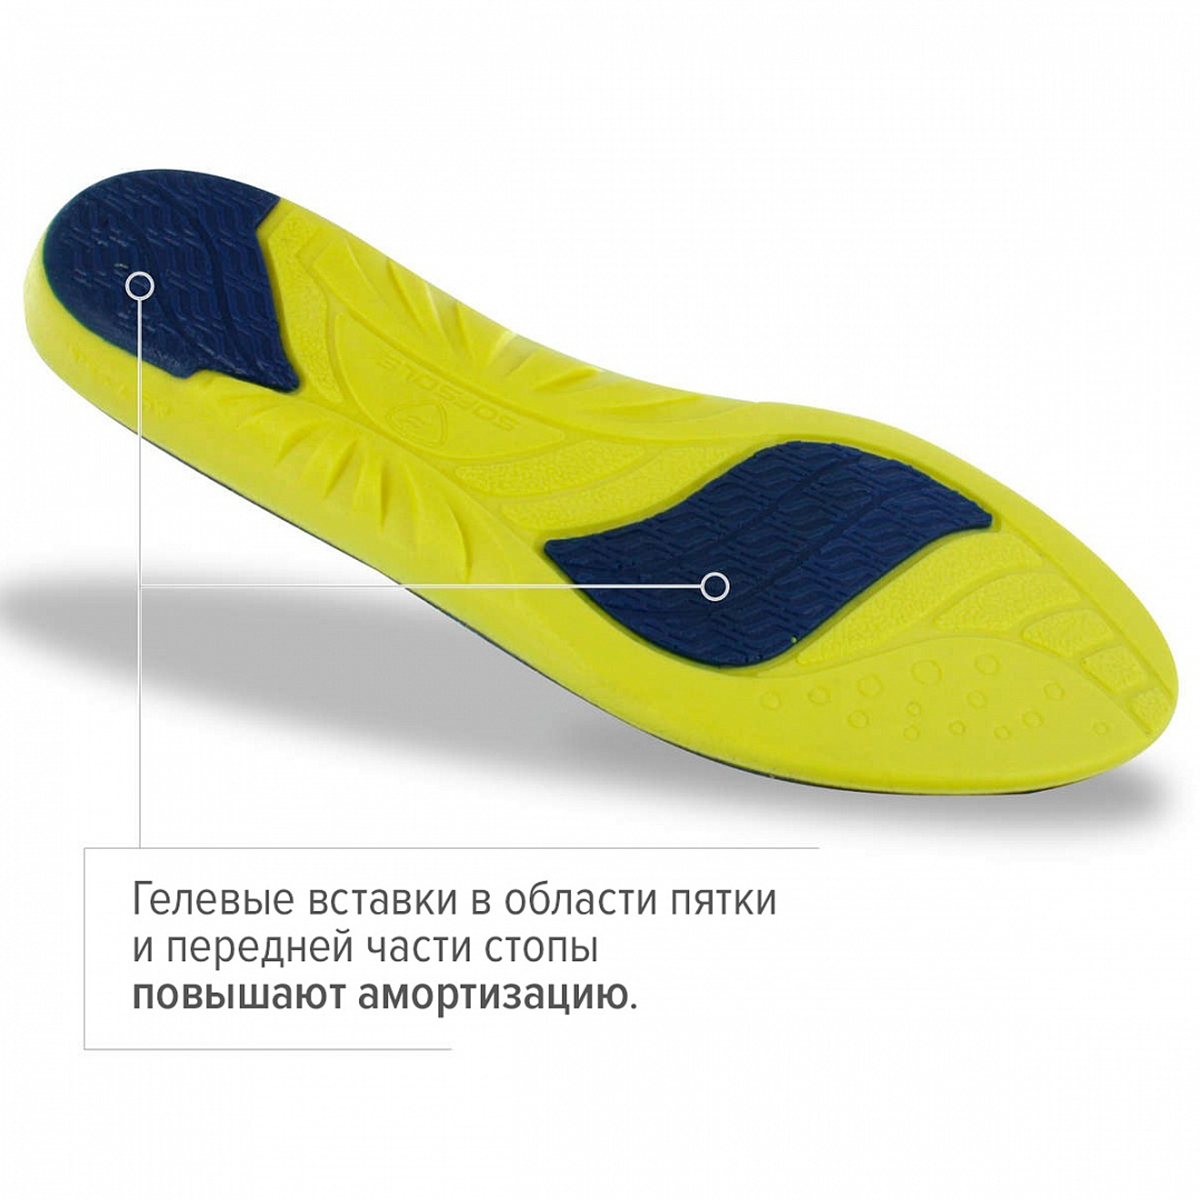 Стельки для обуви Sofsole Athlete р.39-41